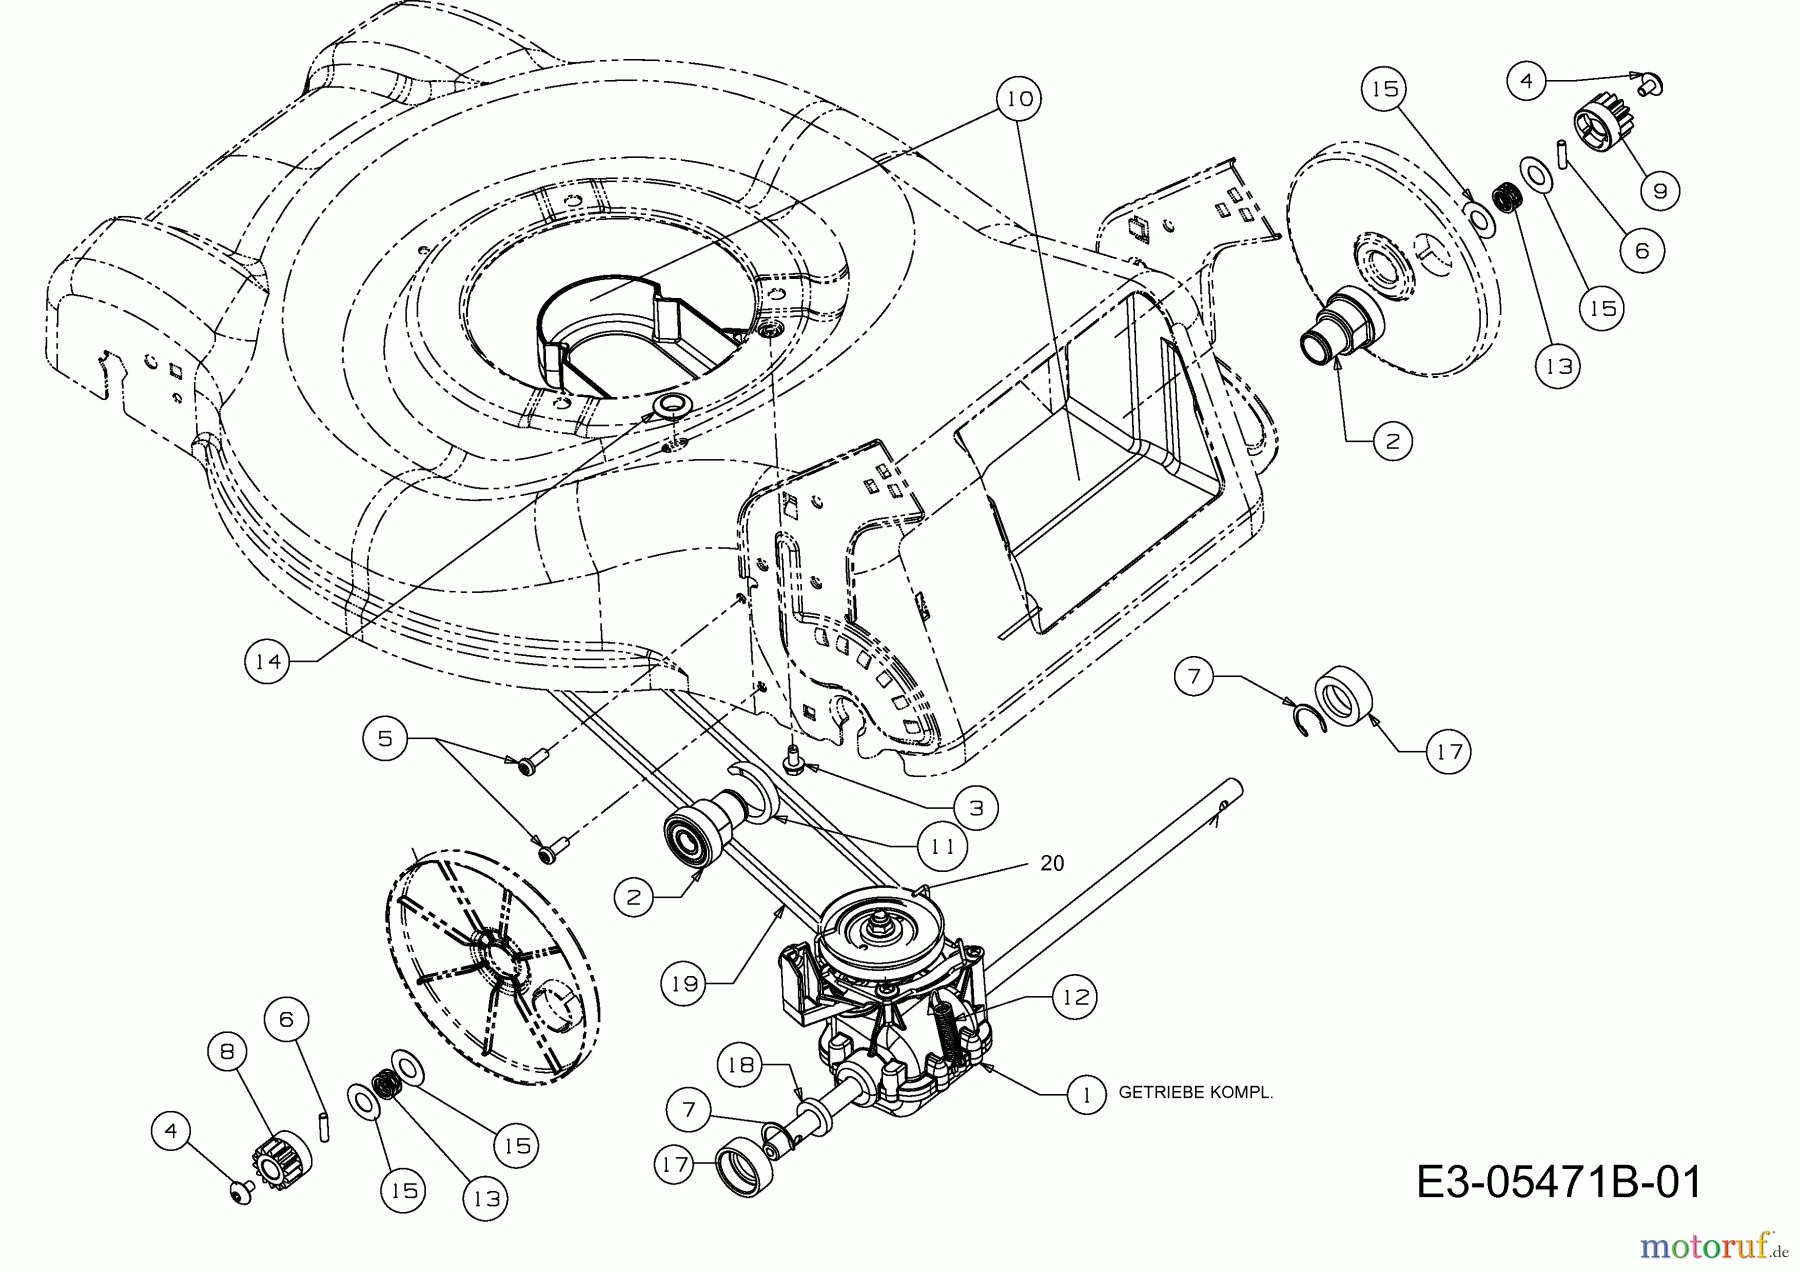  MTD Motormäher mit Antrieb 46 SPOE 12EEJ5M4600  (2012) Getriebe